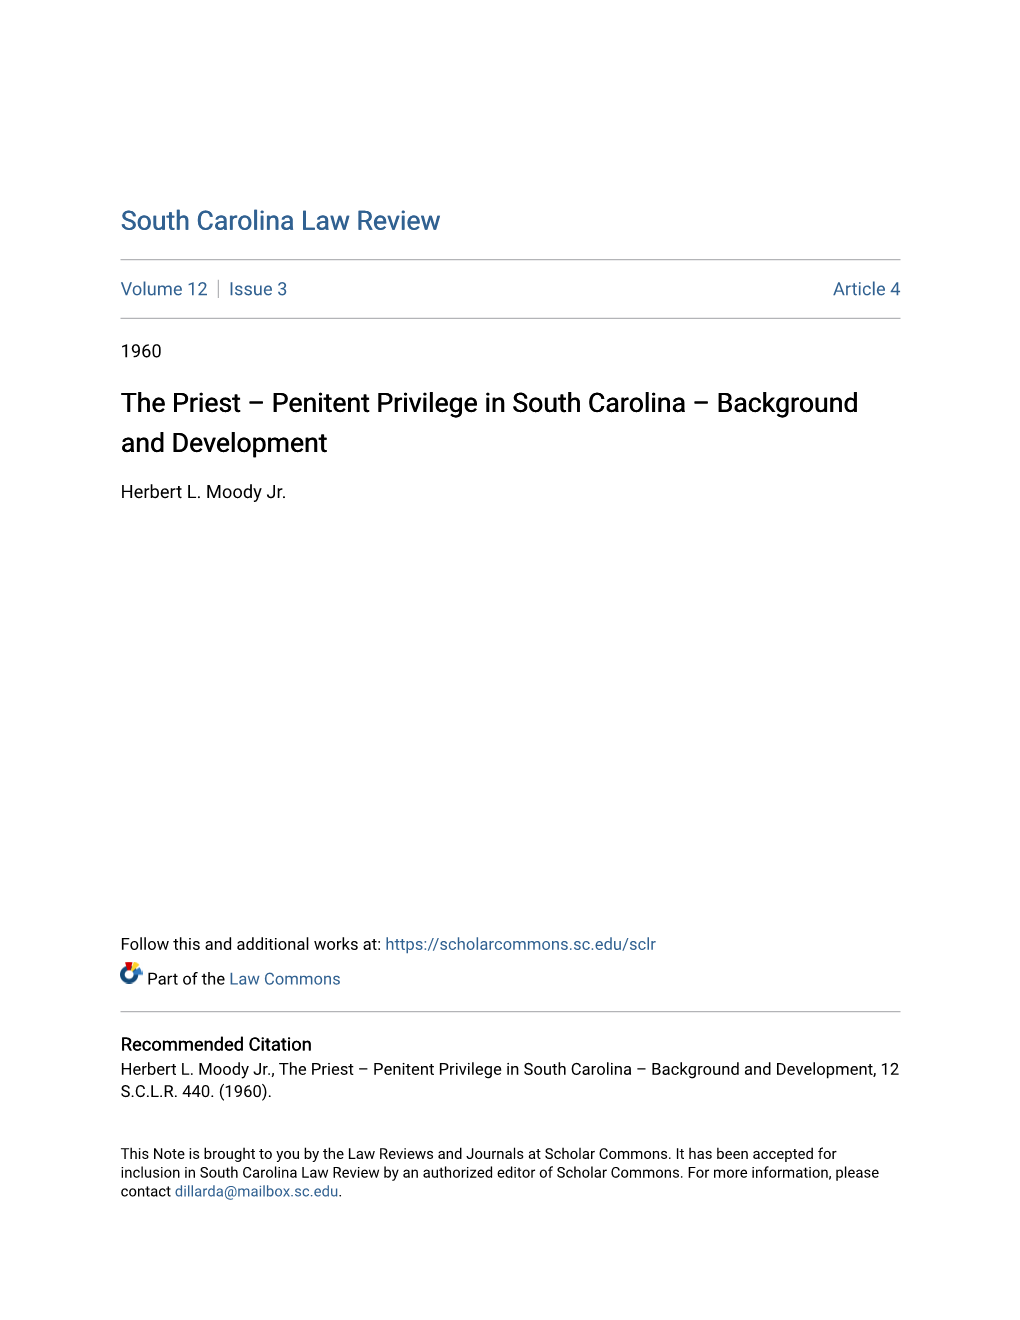 The Priest – Penitent Privilege in South Carolina – Background and Development